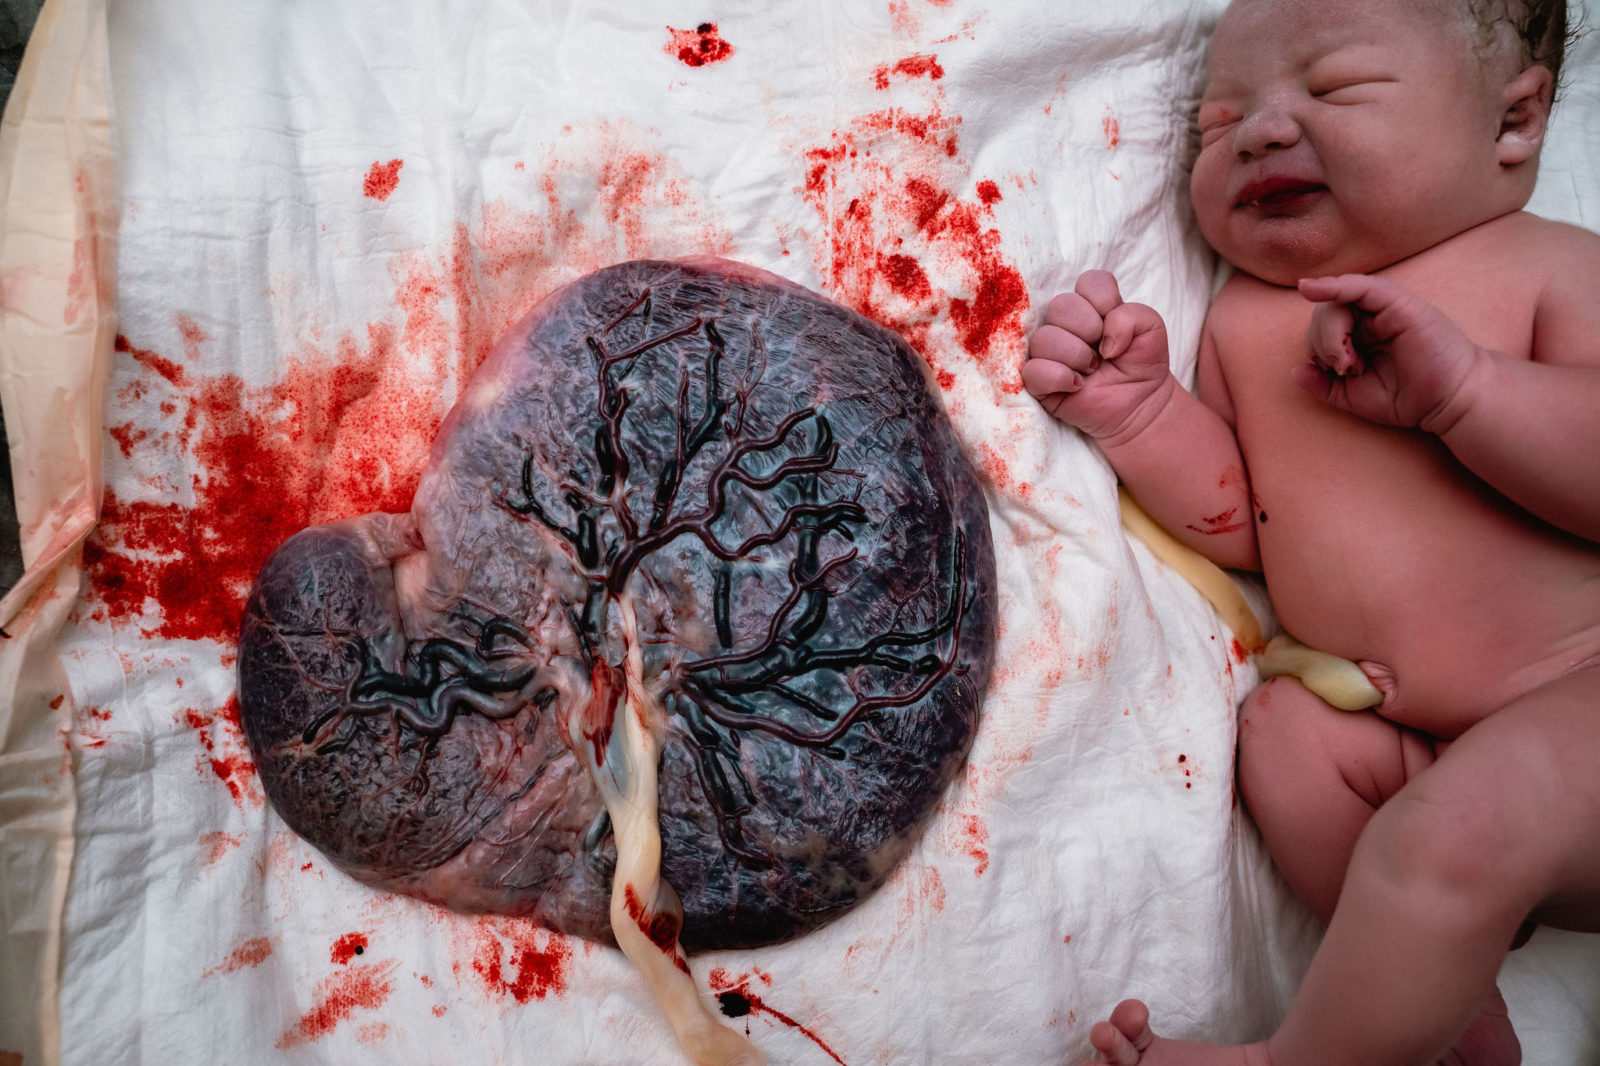 newborn baby and placenta
